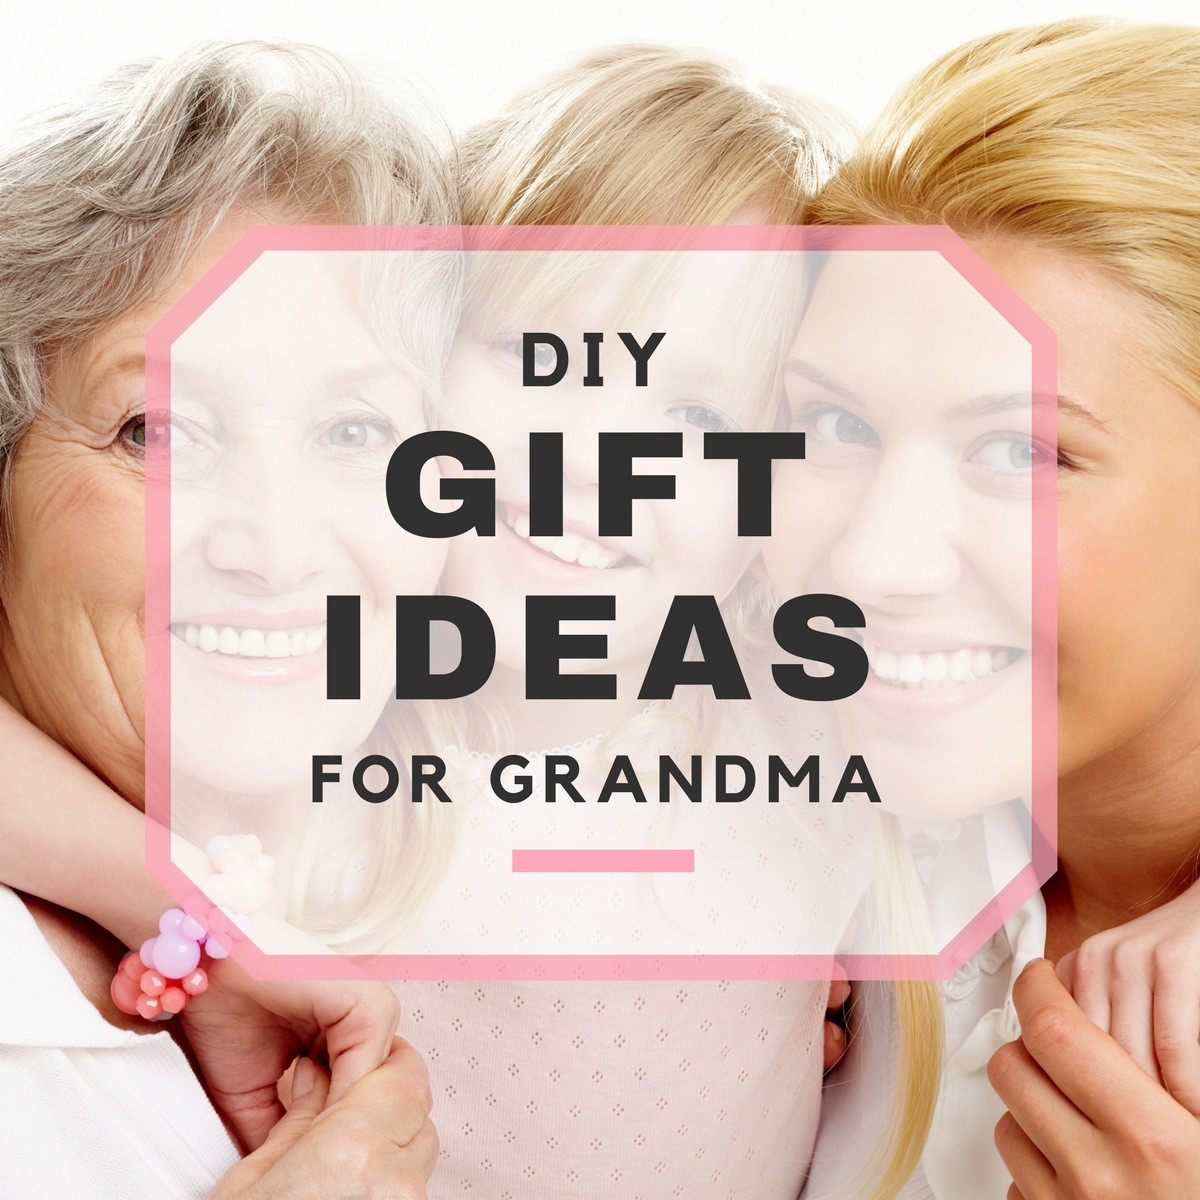 DIY Gifts For Grandmas
 DIY Gift Ideas for Grandma